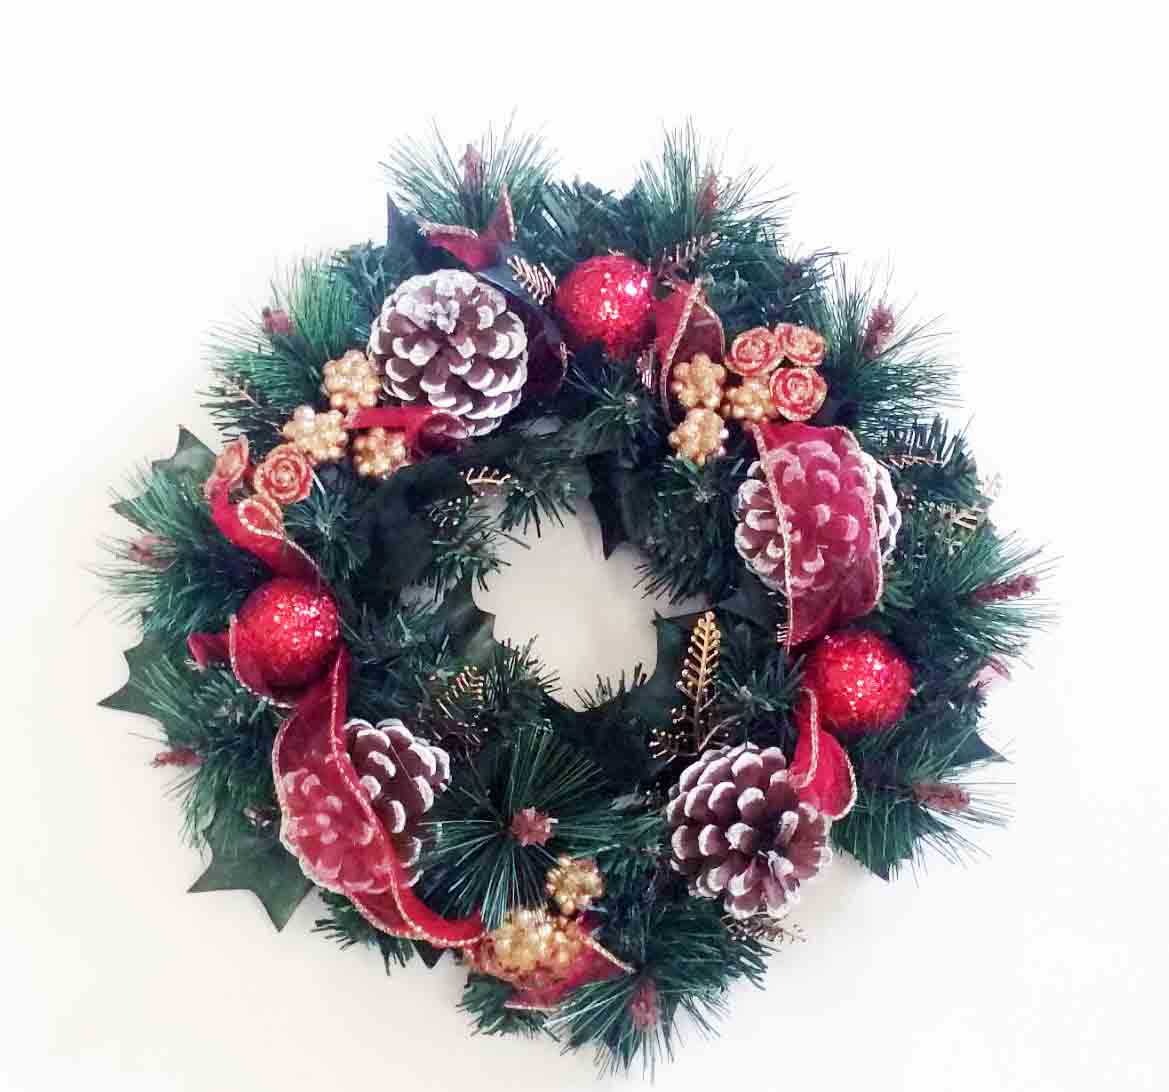 XW001 - 12" Decorated Wreath - 11.50 ea